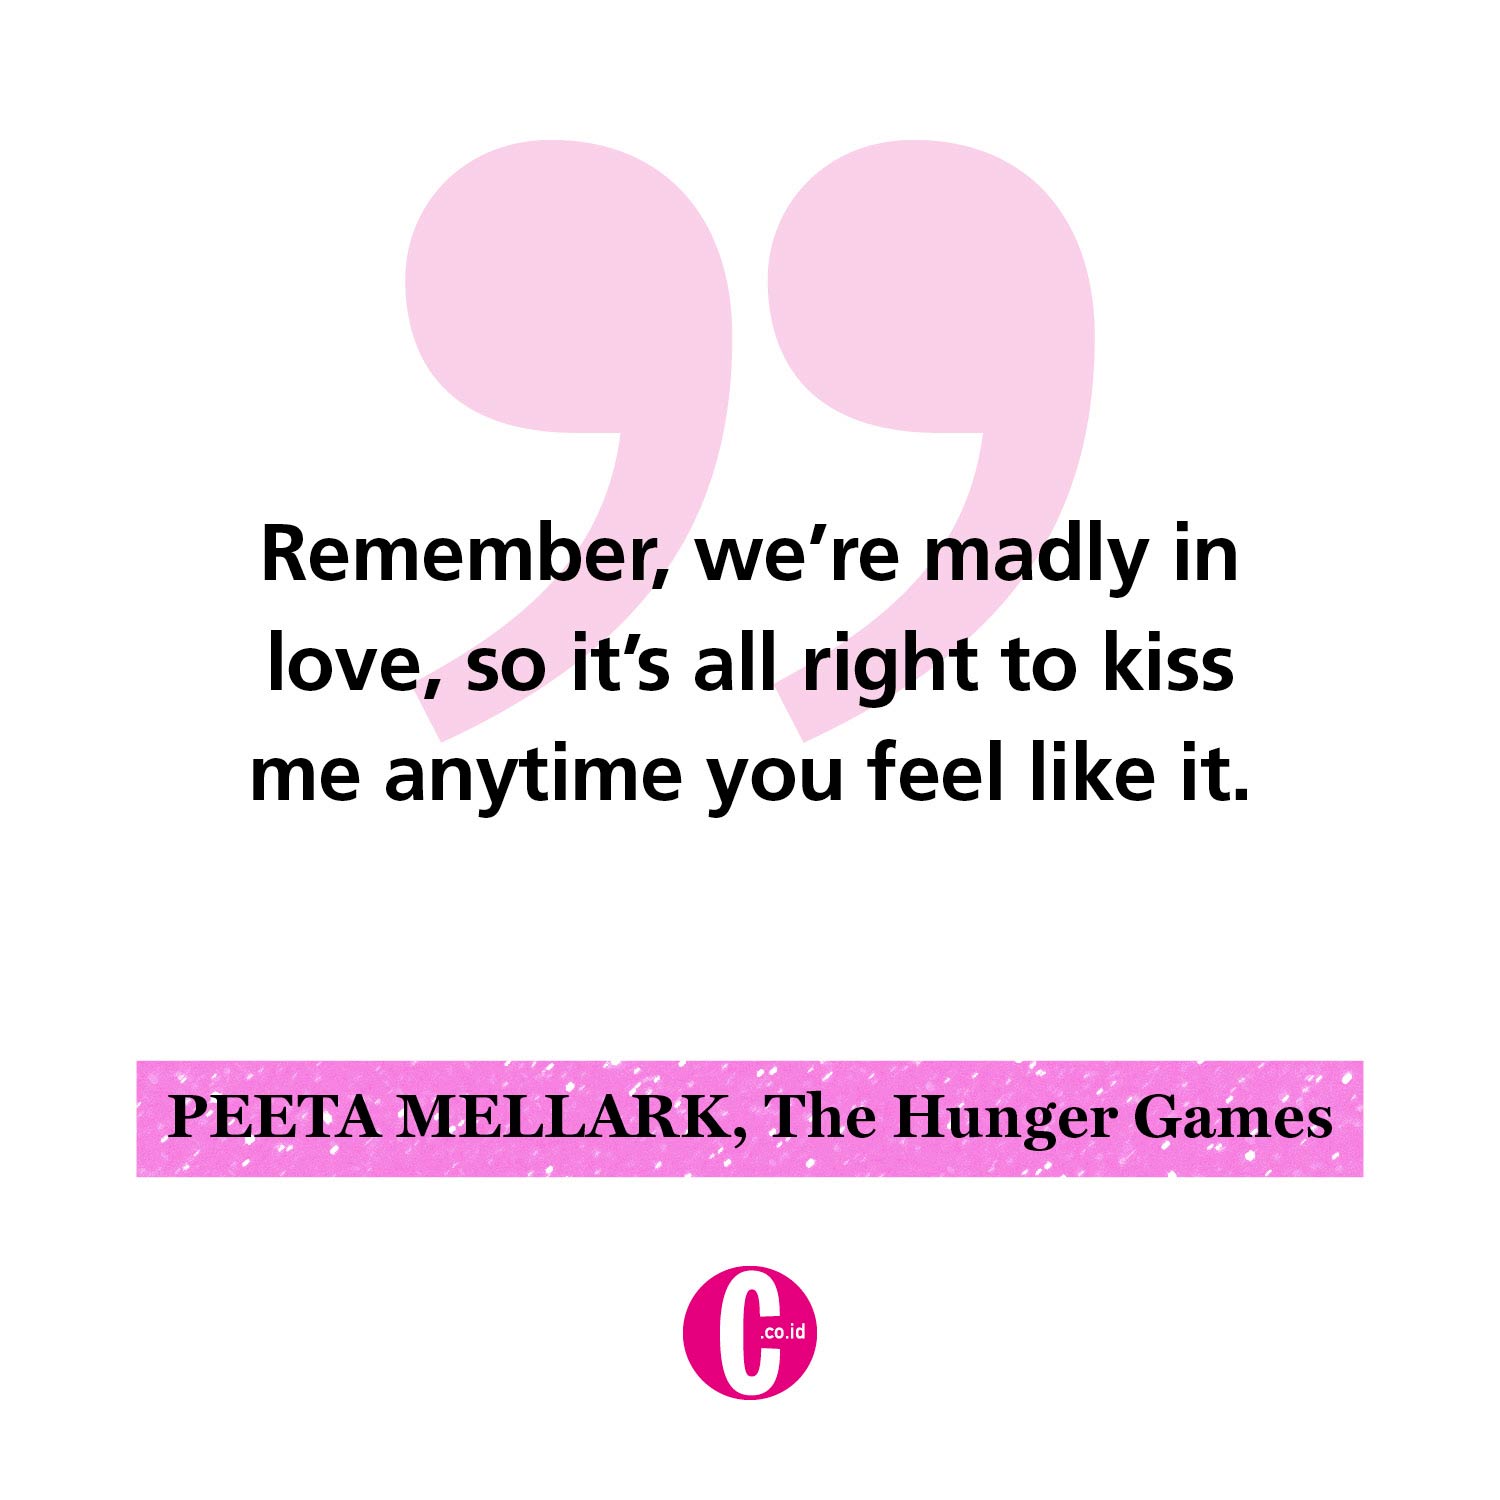 Kata-kata romantis dari Peeta Mellark, The Hunger Games